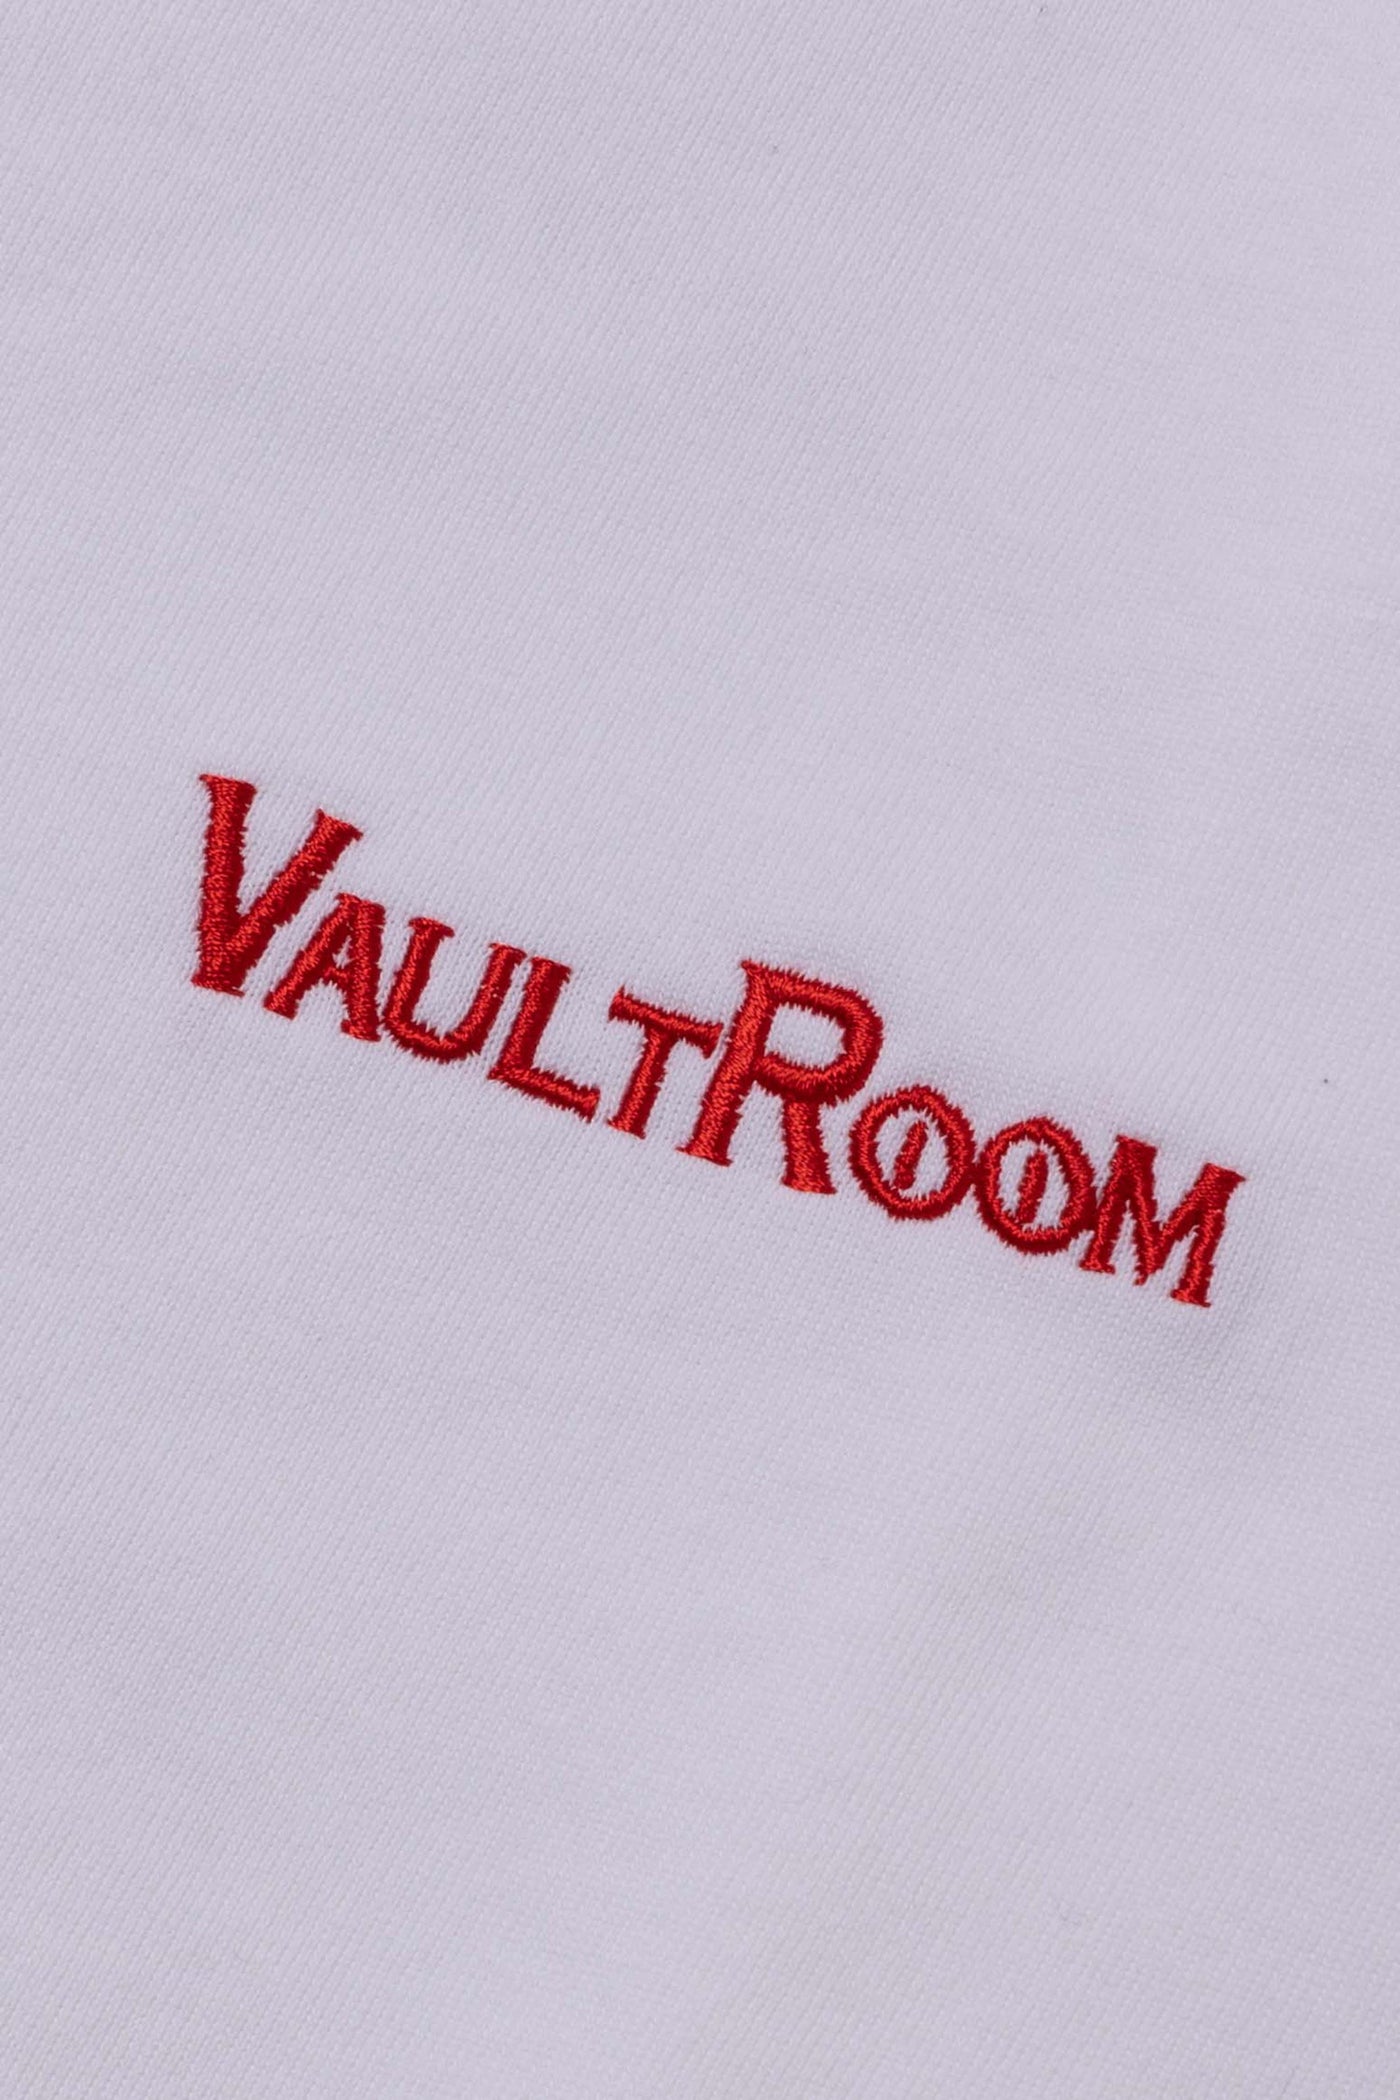 vaultroom VR × Rathalos | unimil.org